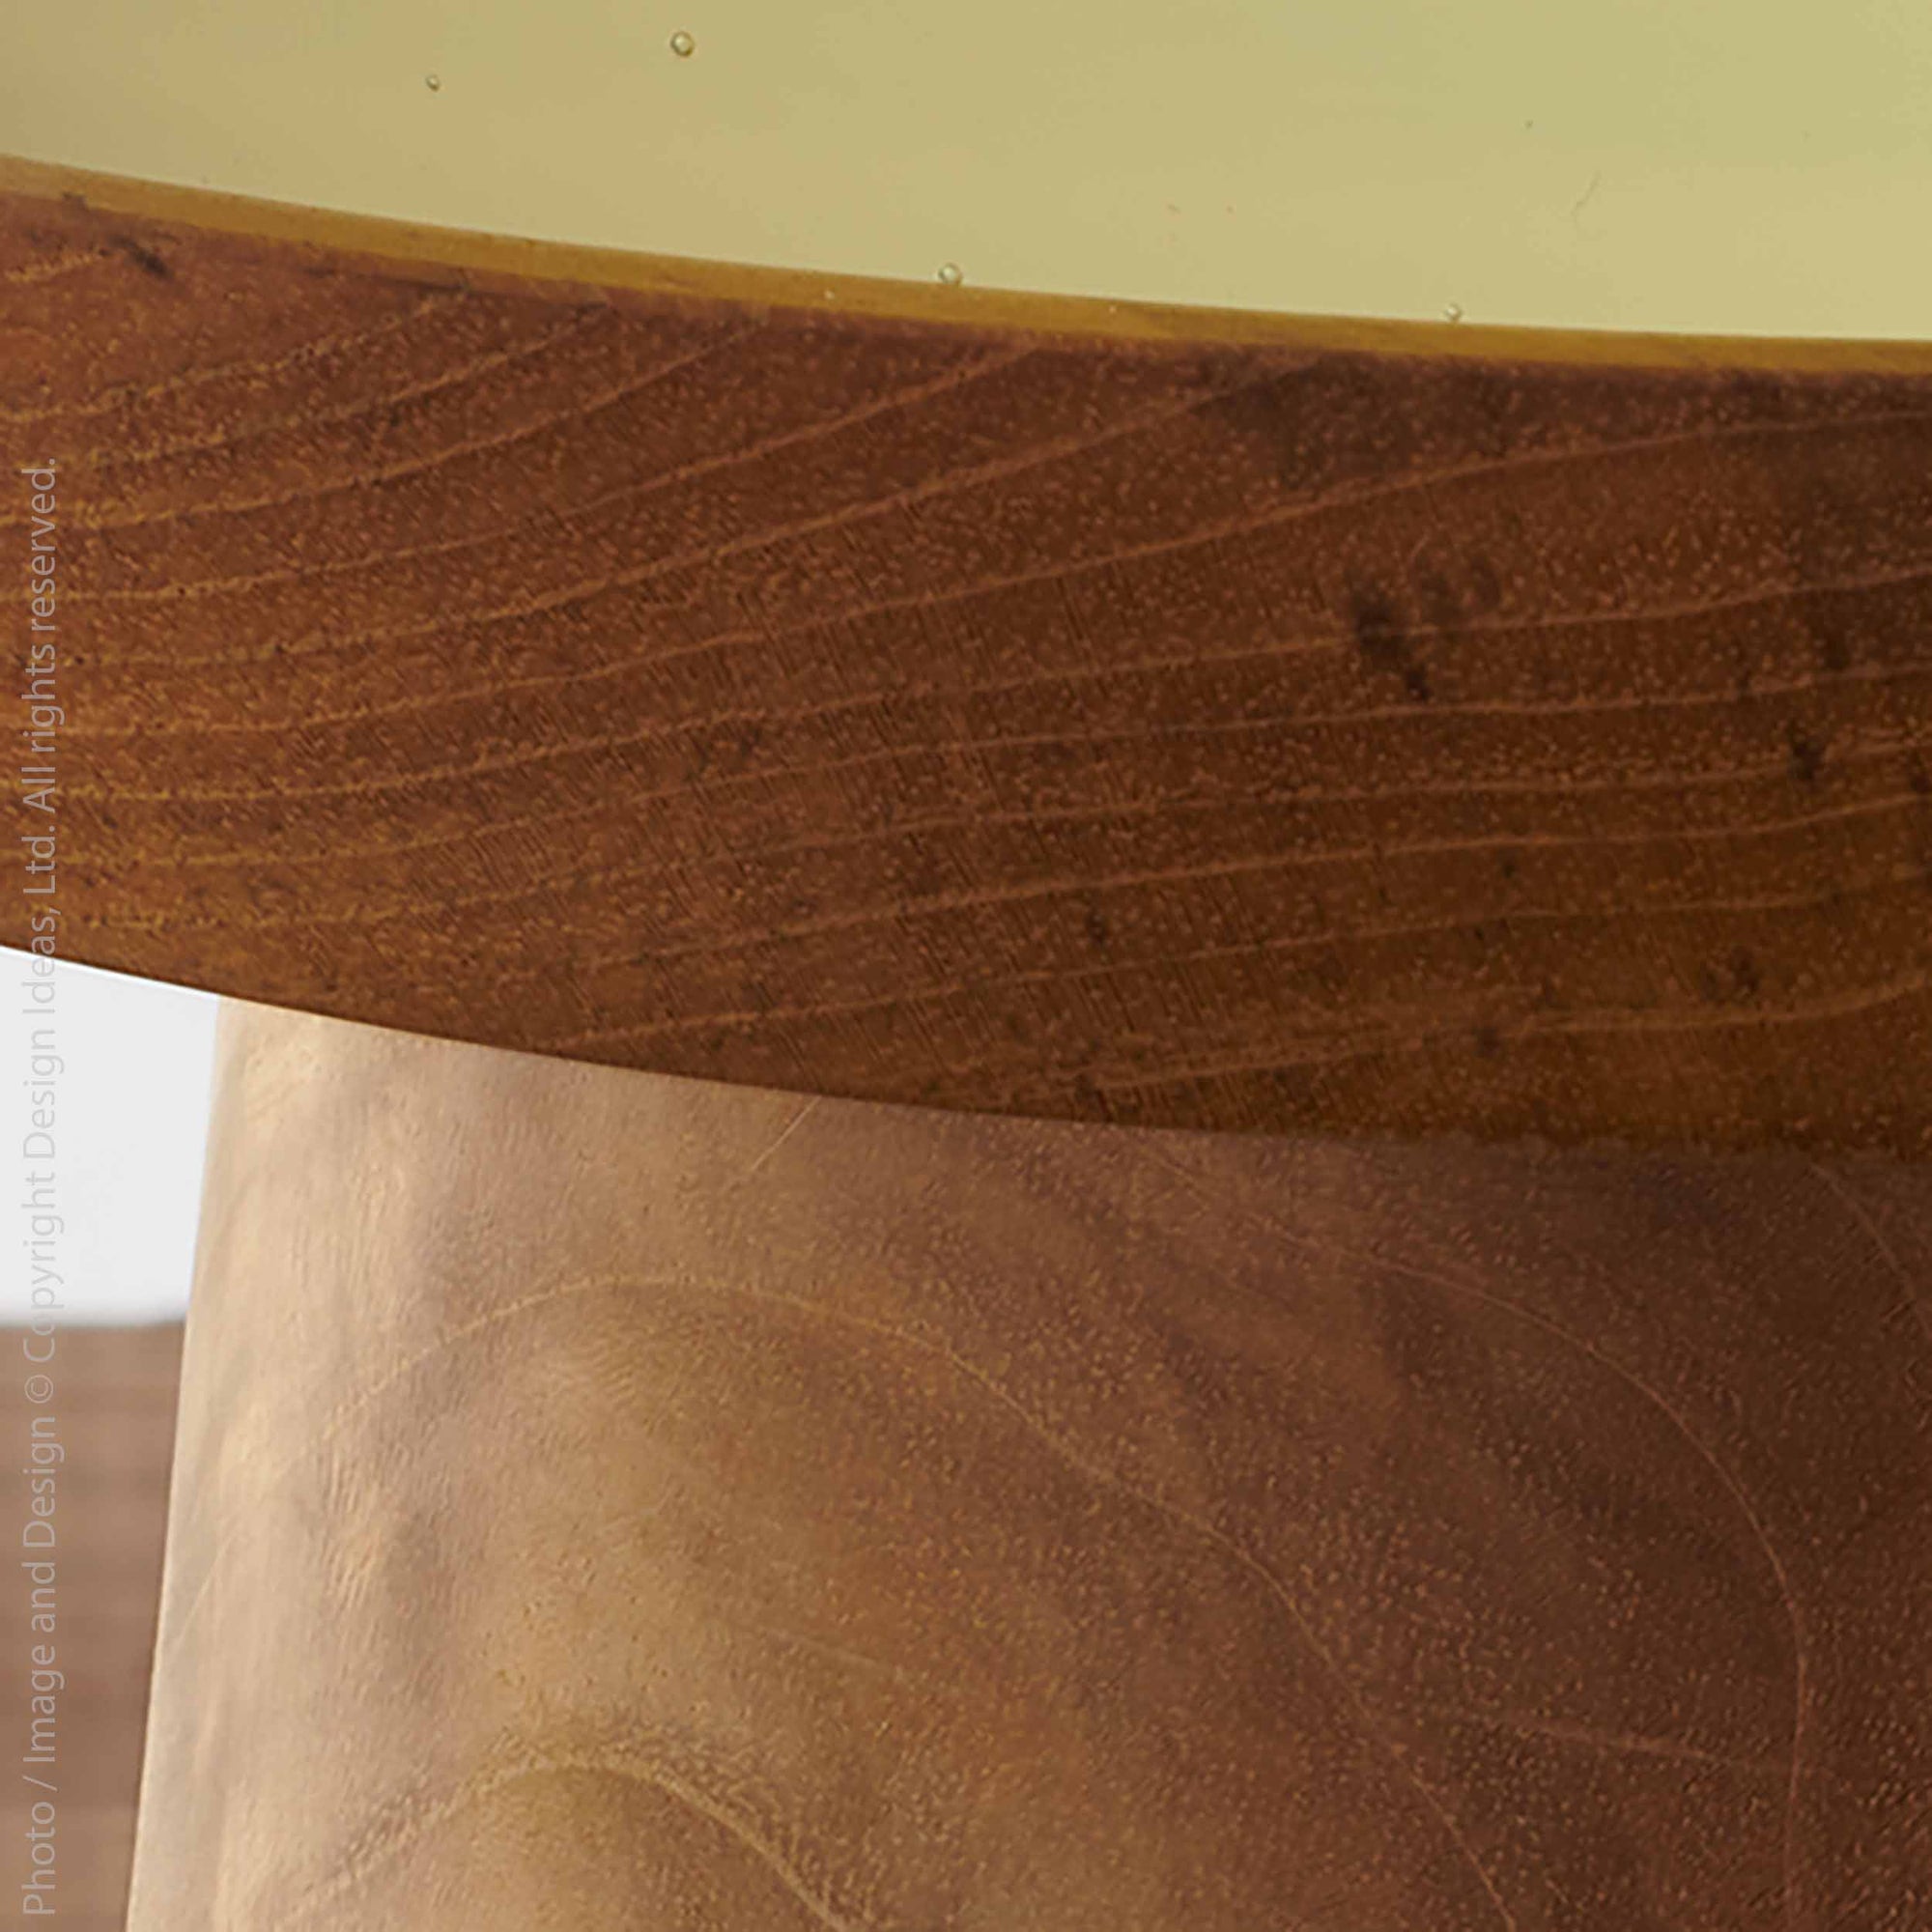 Chiku™ Carved Teak Wood Riser (8.6 in. dia)